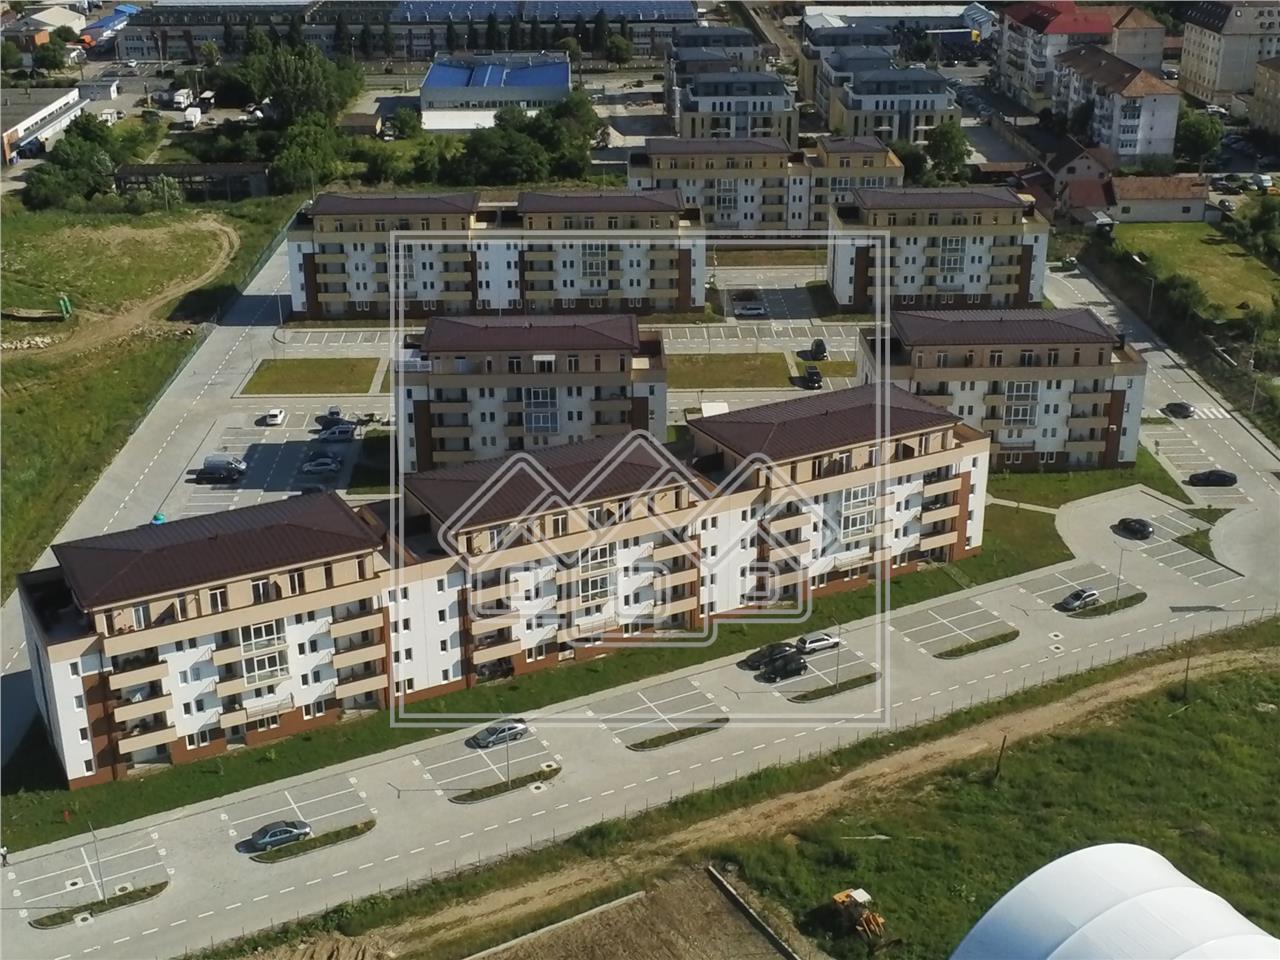 Apartment for sale in Sibiu - intermediate floor - building provided